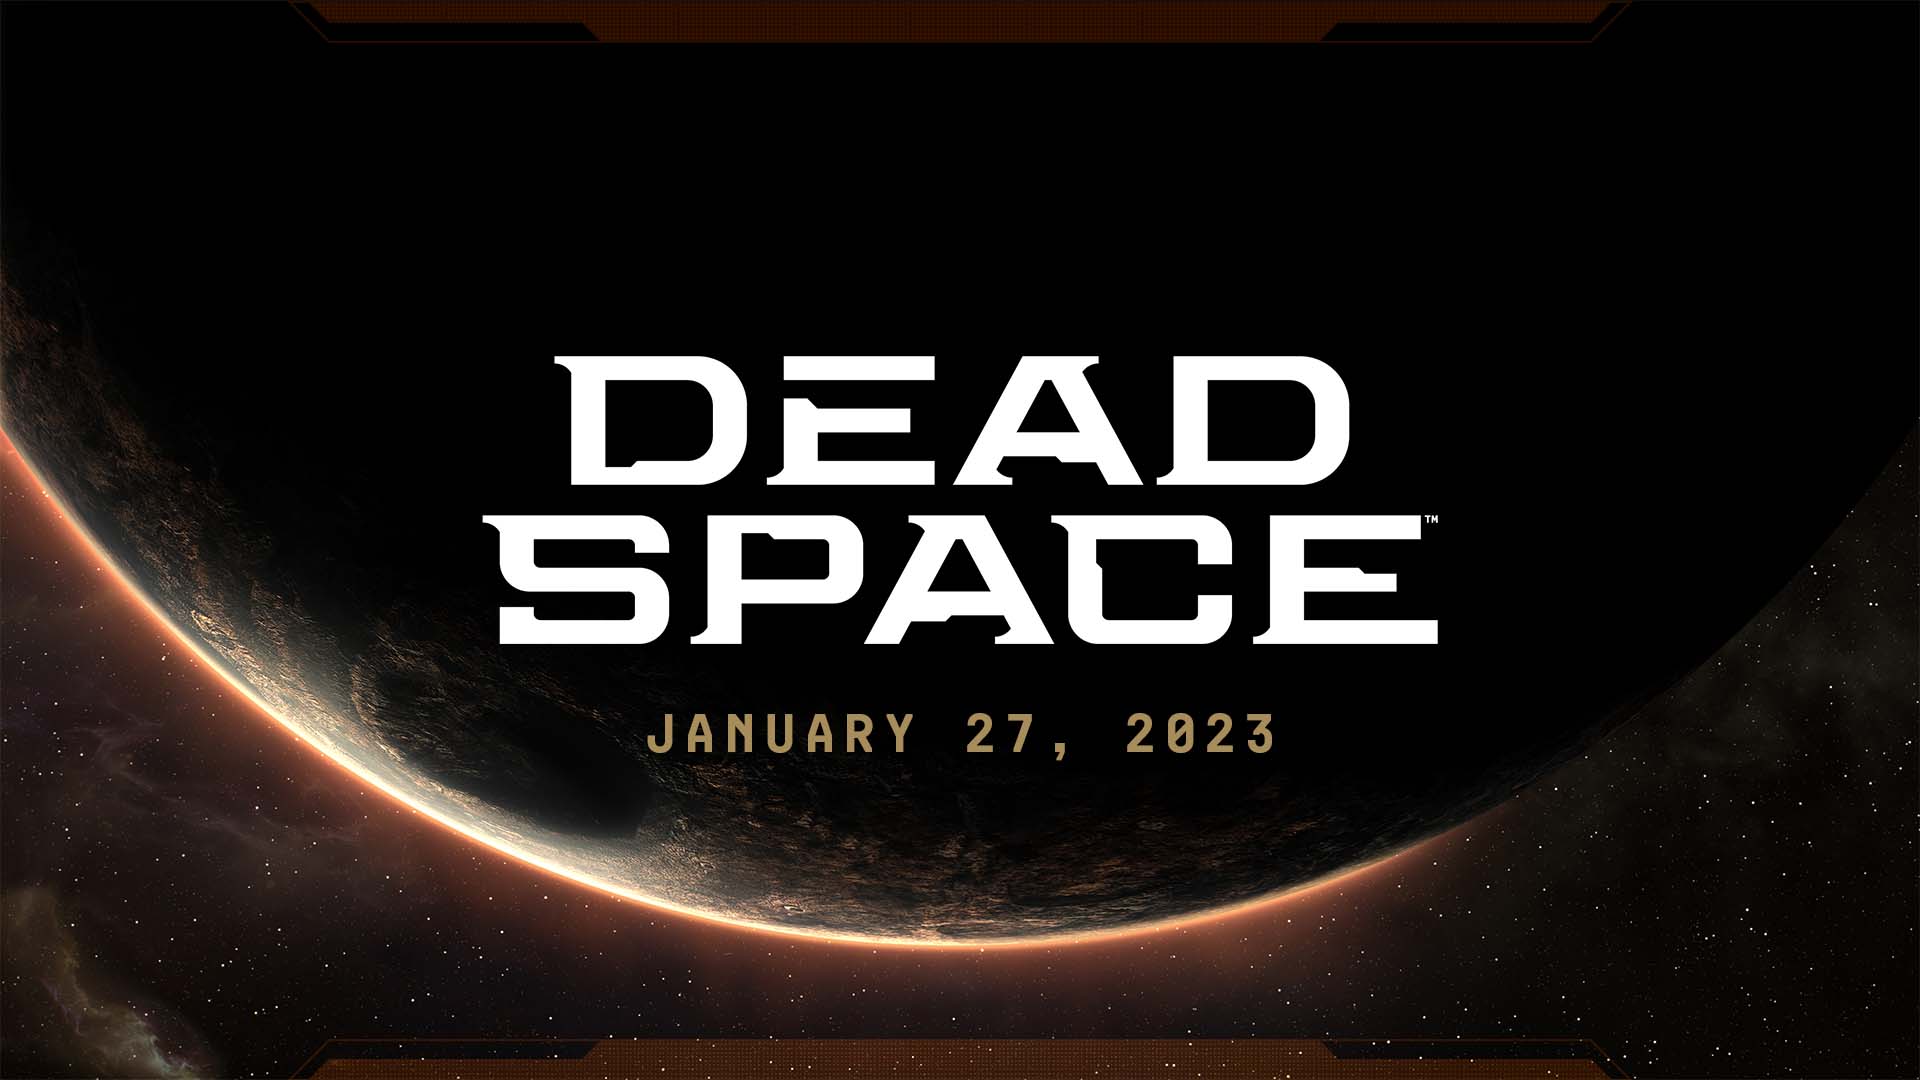 Dead Space remake